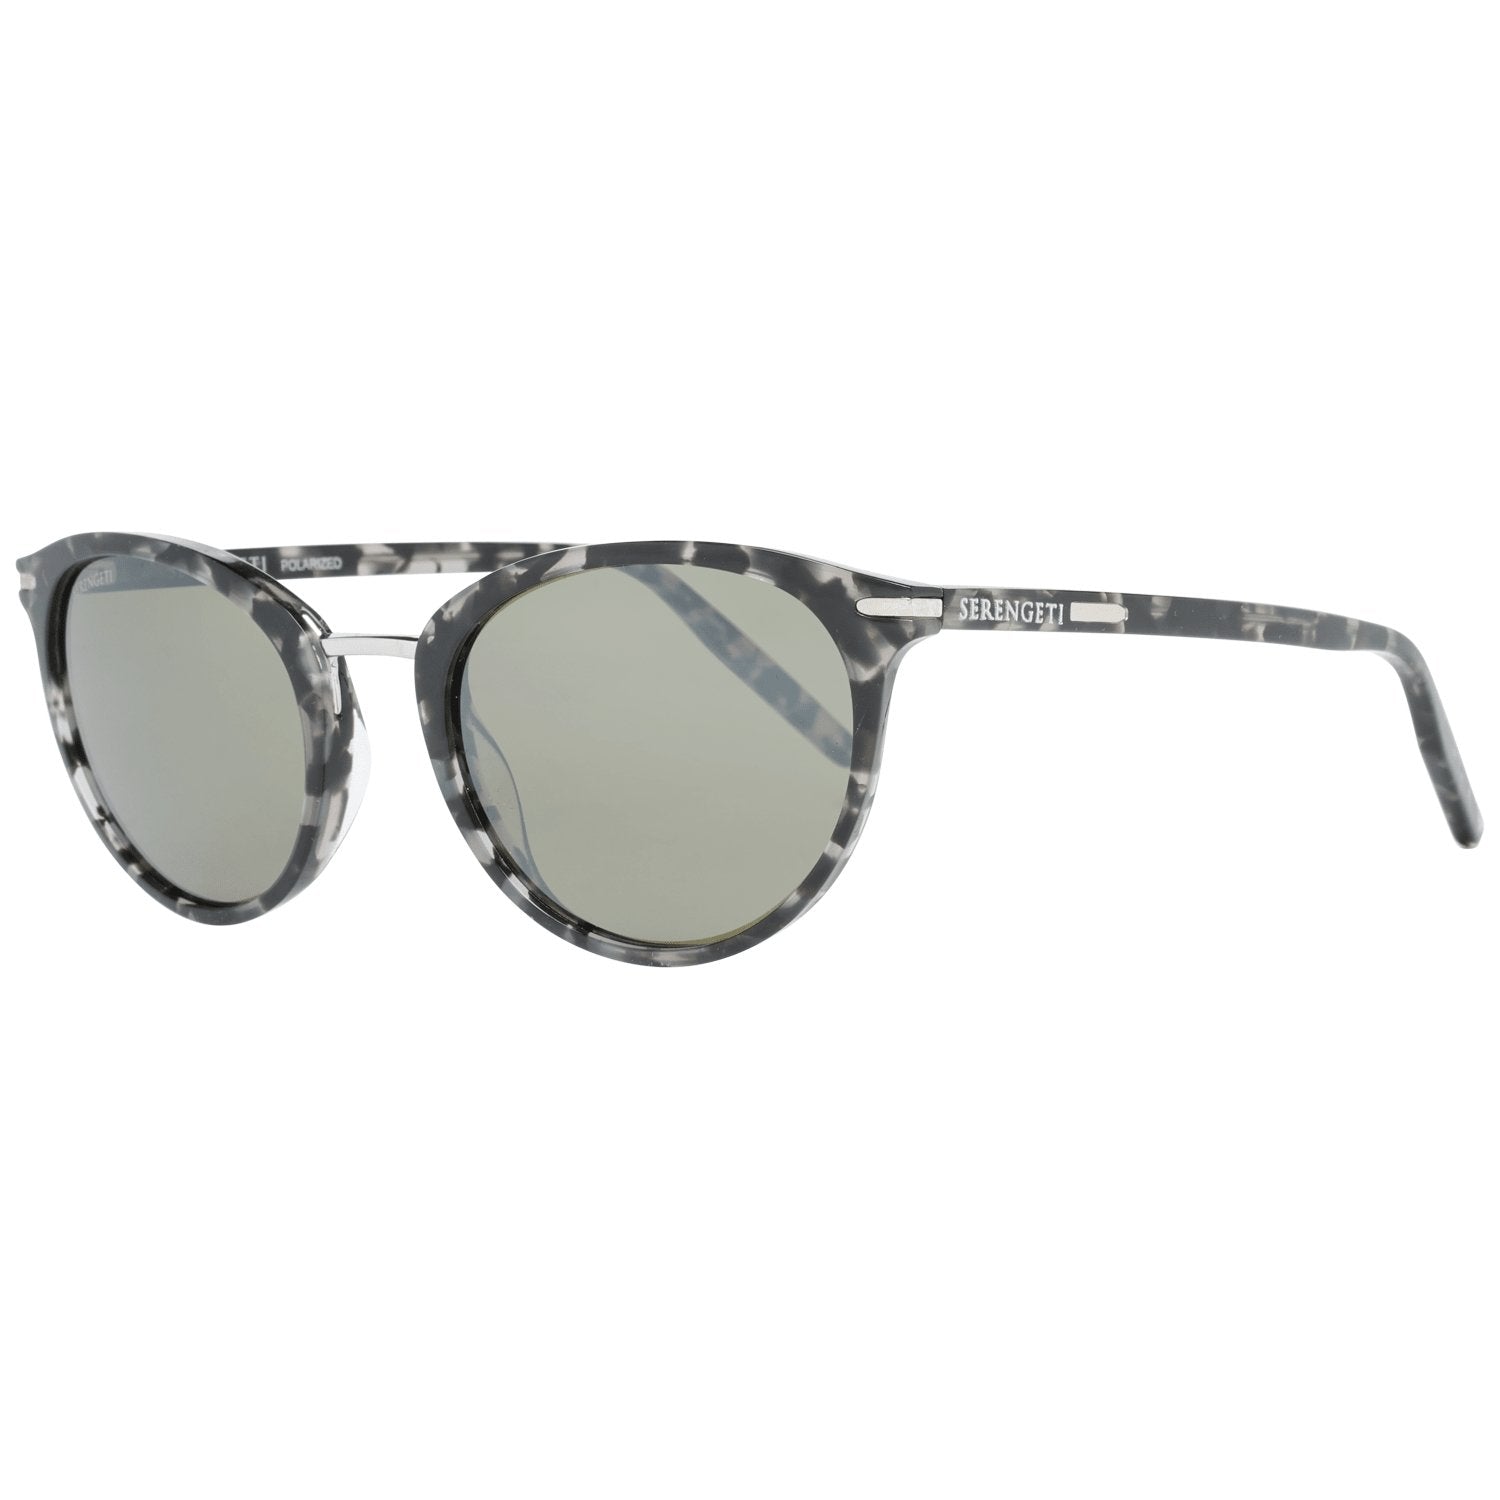 Serengeti Grey Sunglasses for Woman - Fizigo